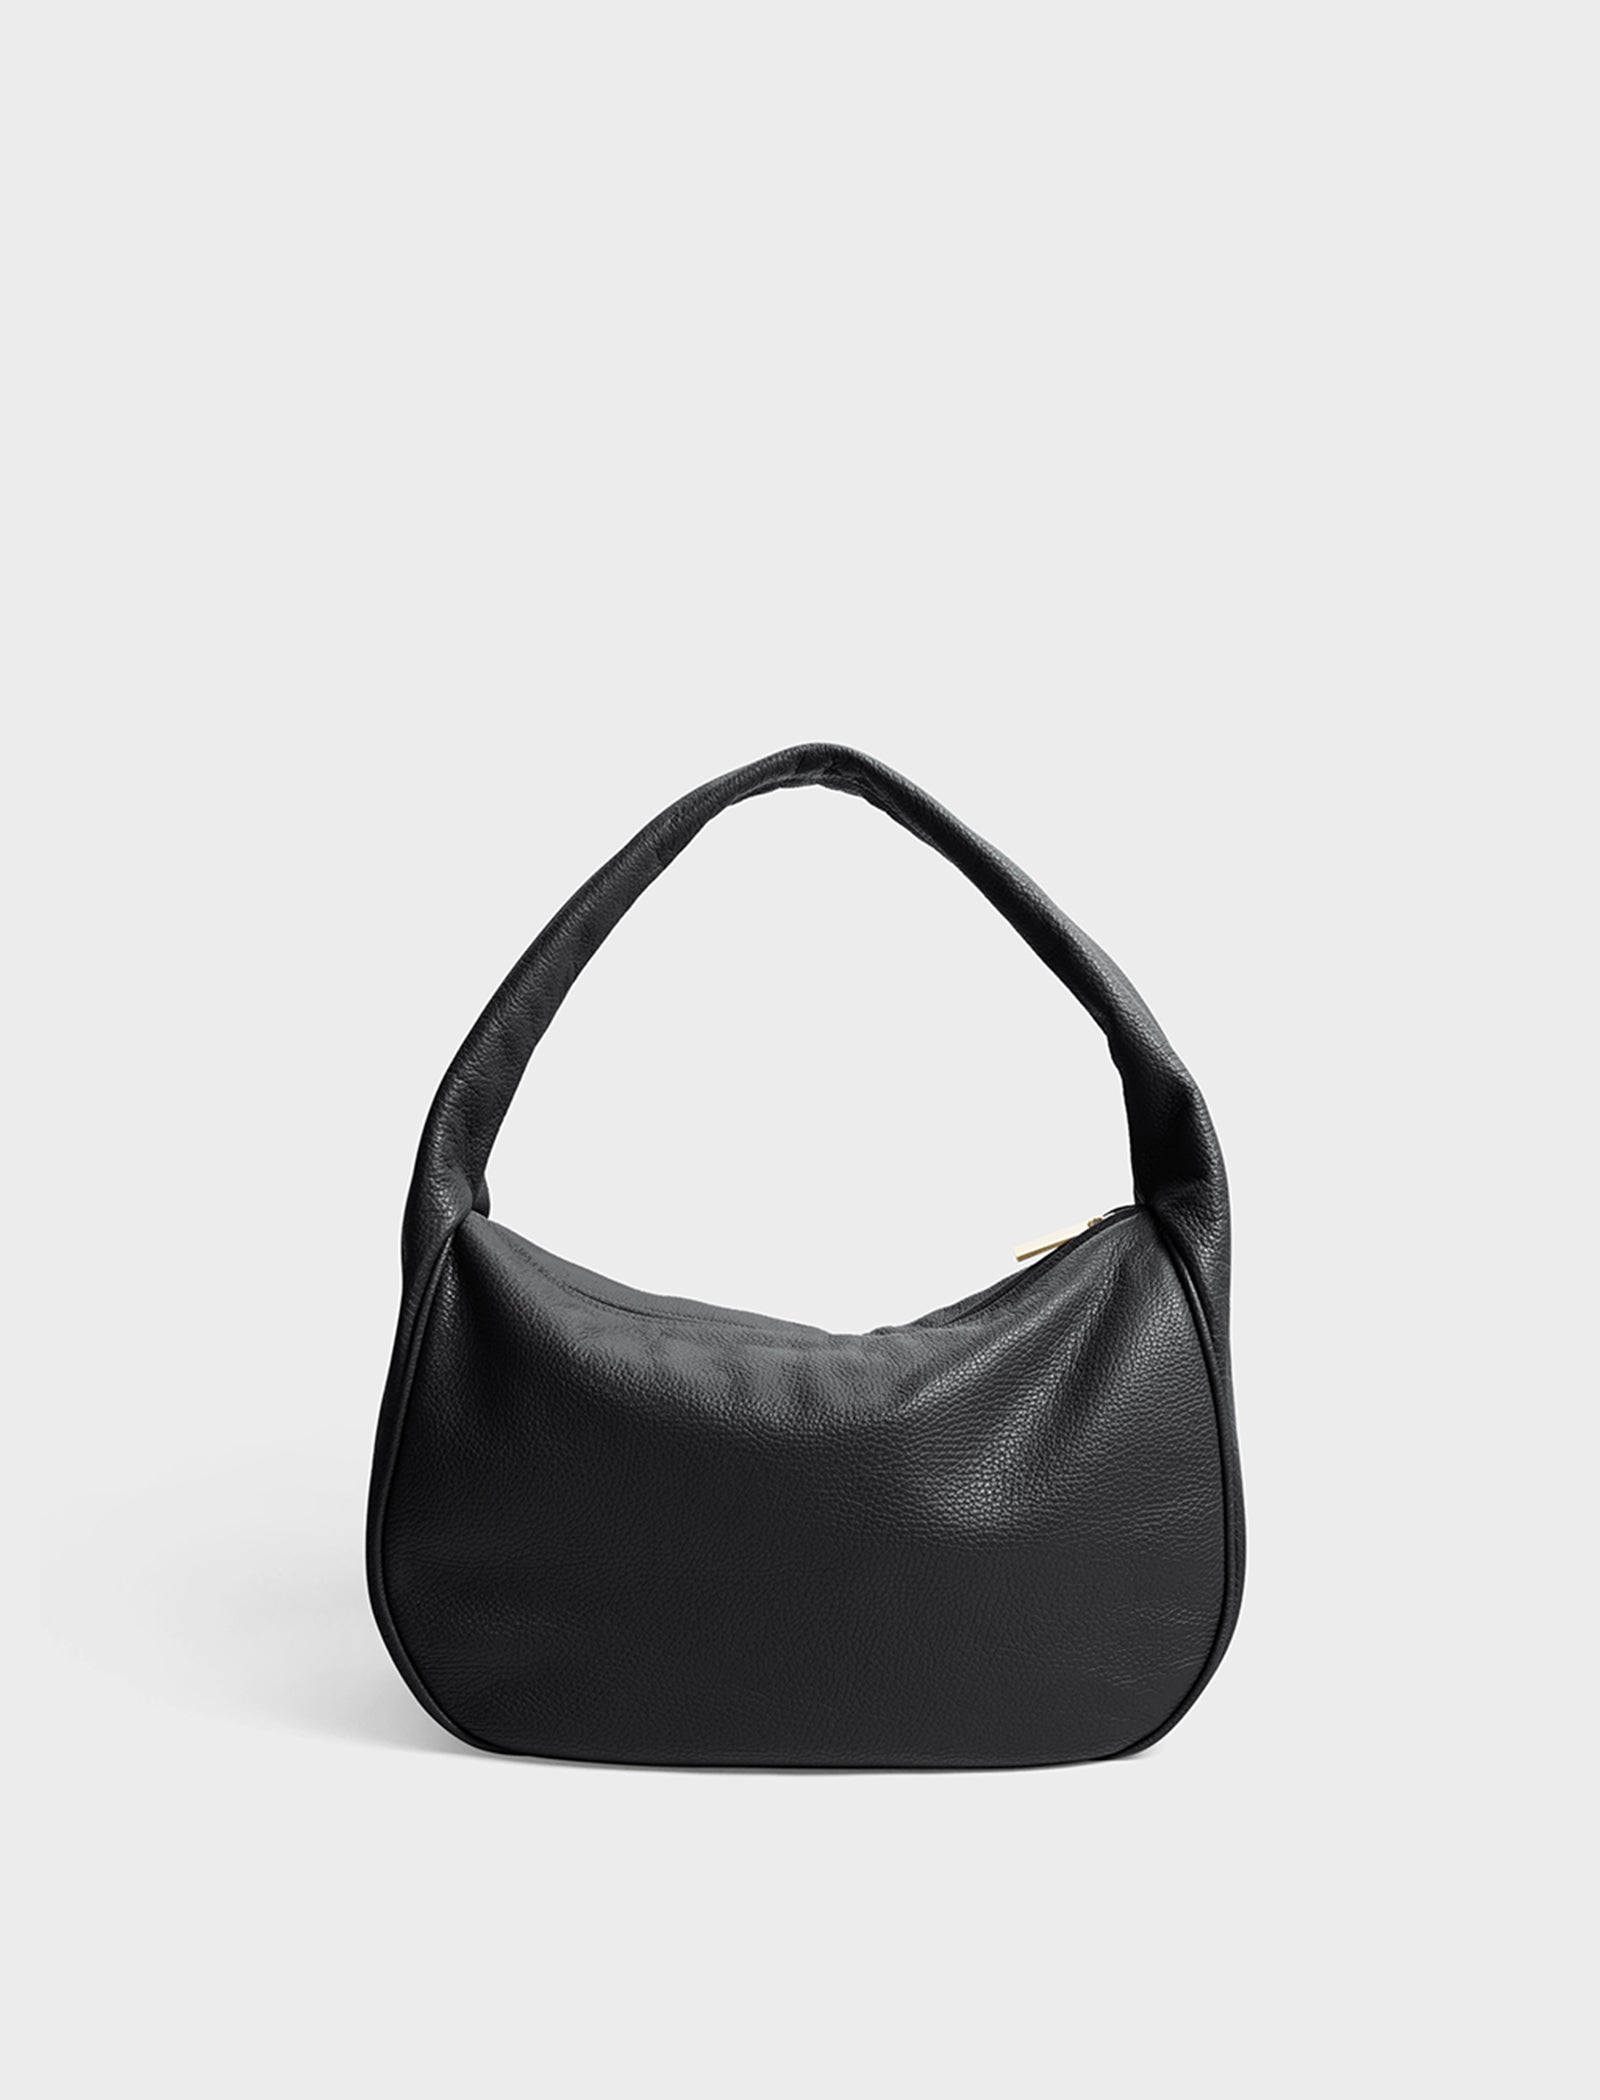 Halo Day - Grain Black | Leather Shoulder Bag | A-ESQUE